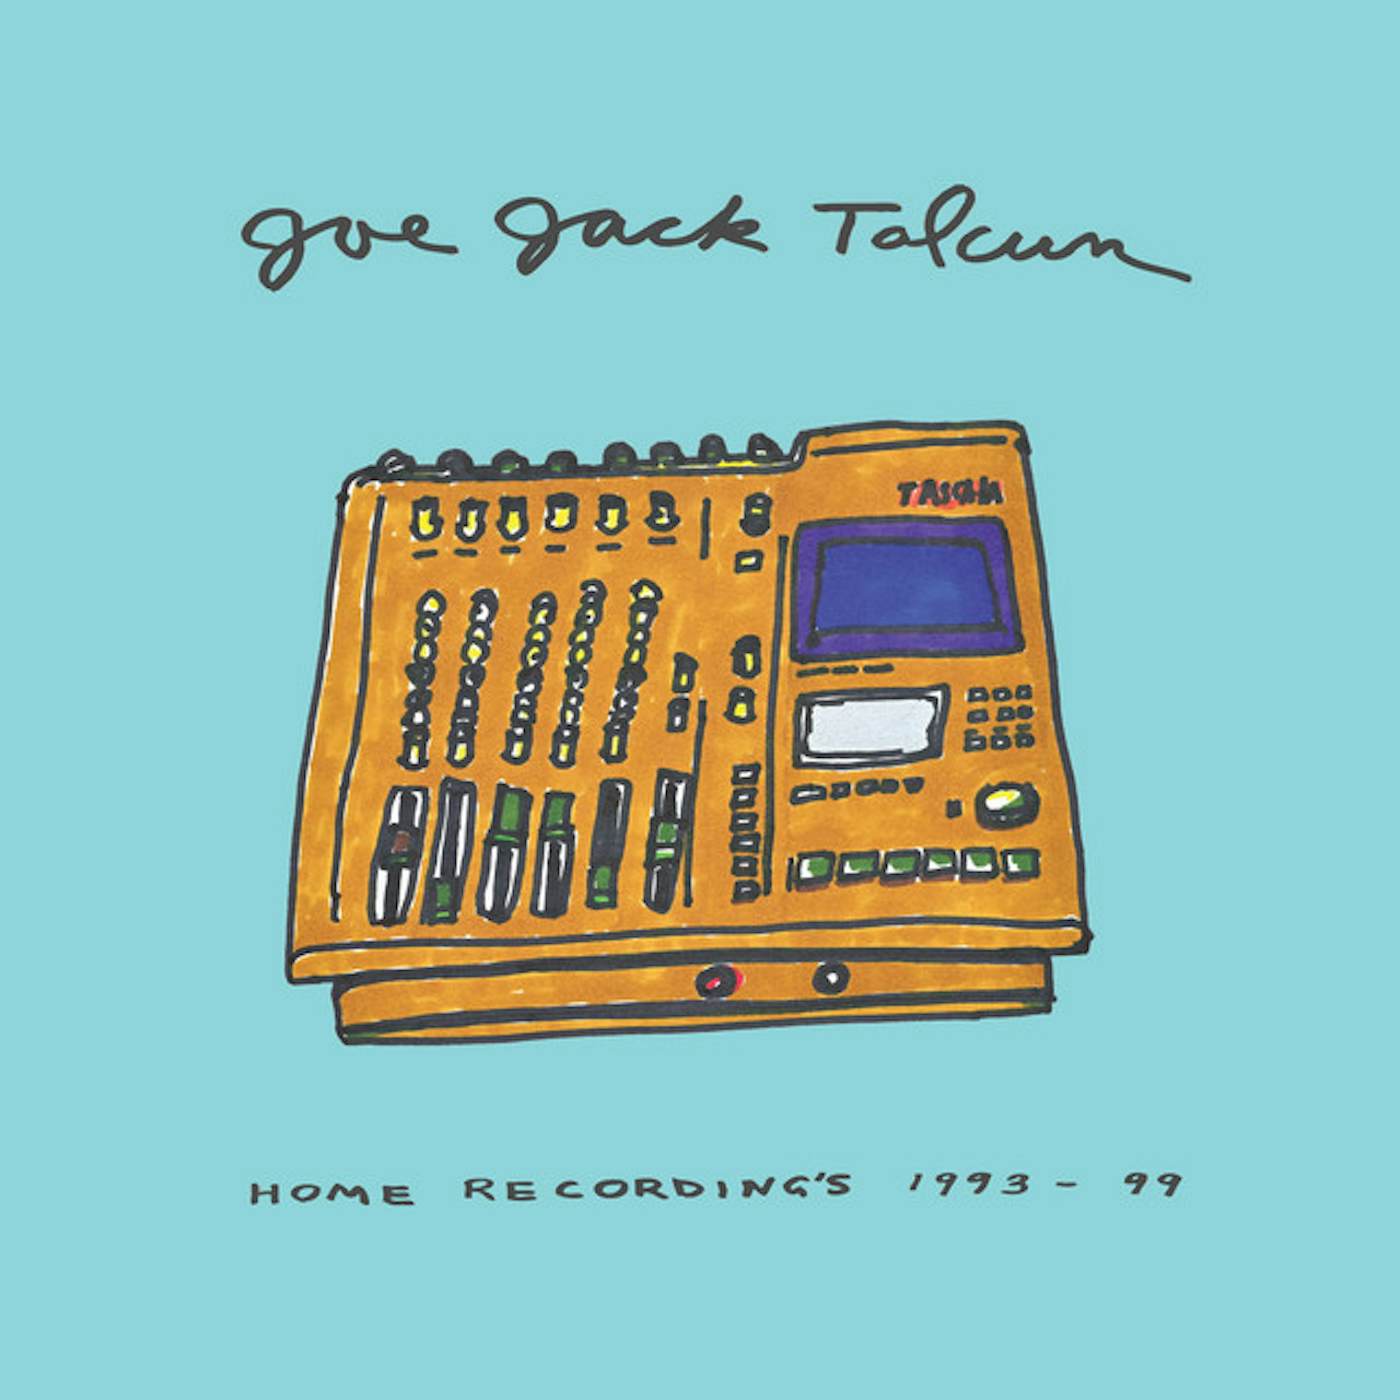 Joe Jack Talcum HOME RECORDINGS 1993-99 Vinyl Record